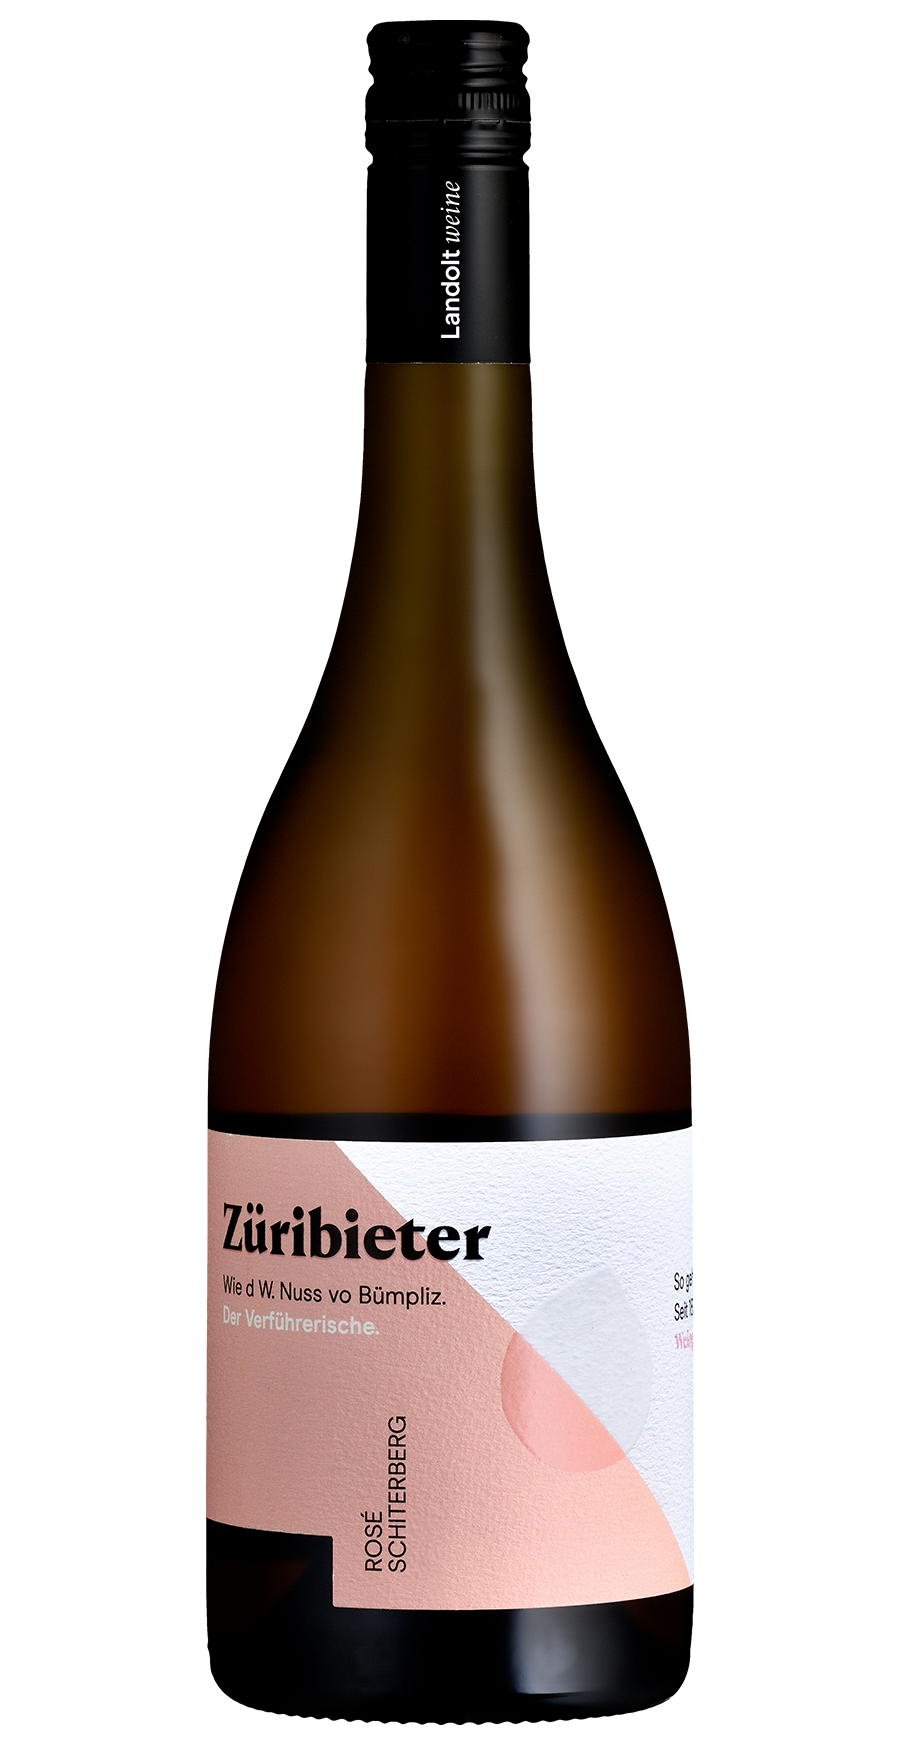 Züribieter Rosé Schiterberg AOC 75 cl